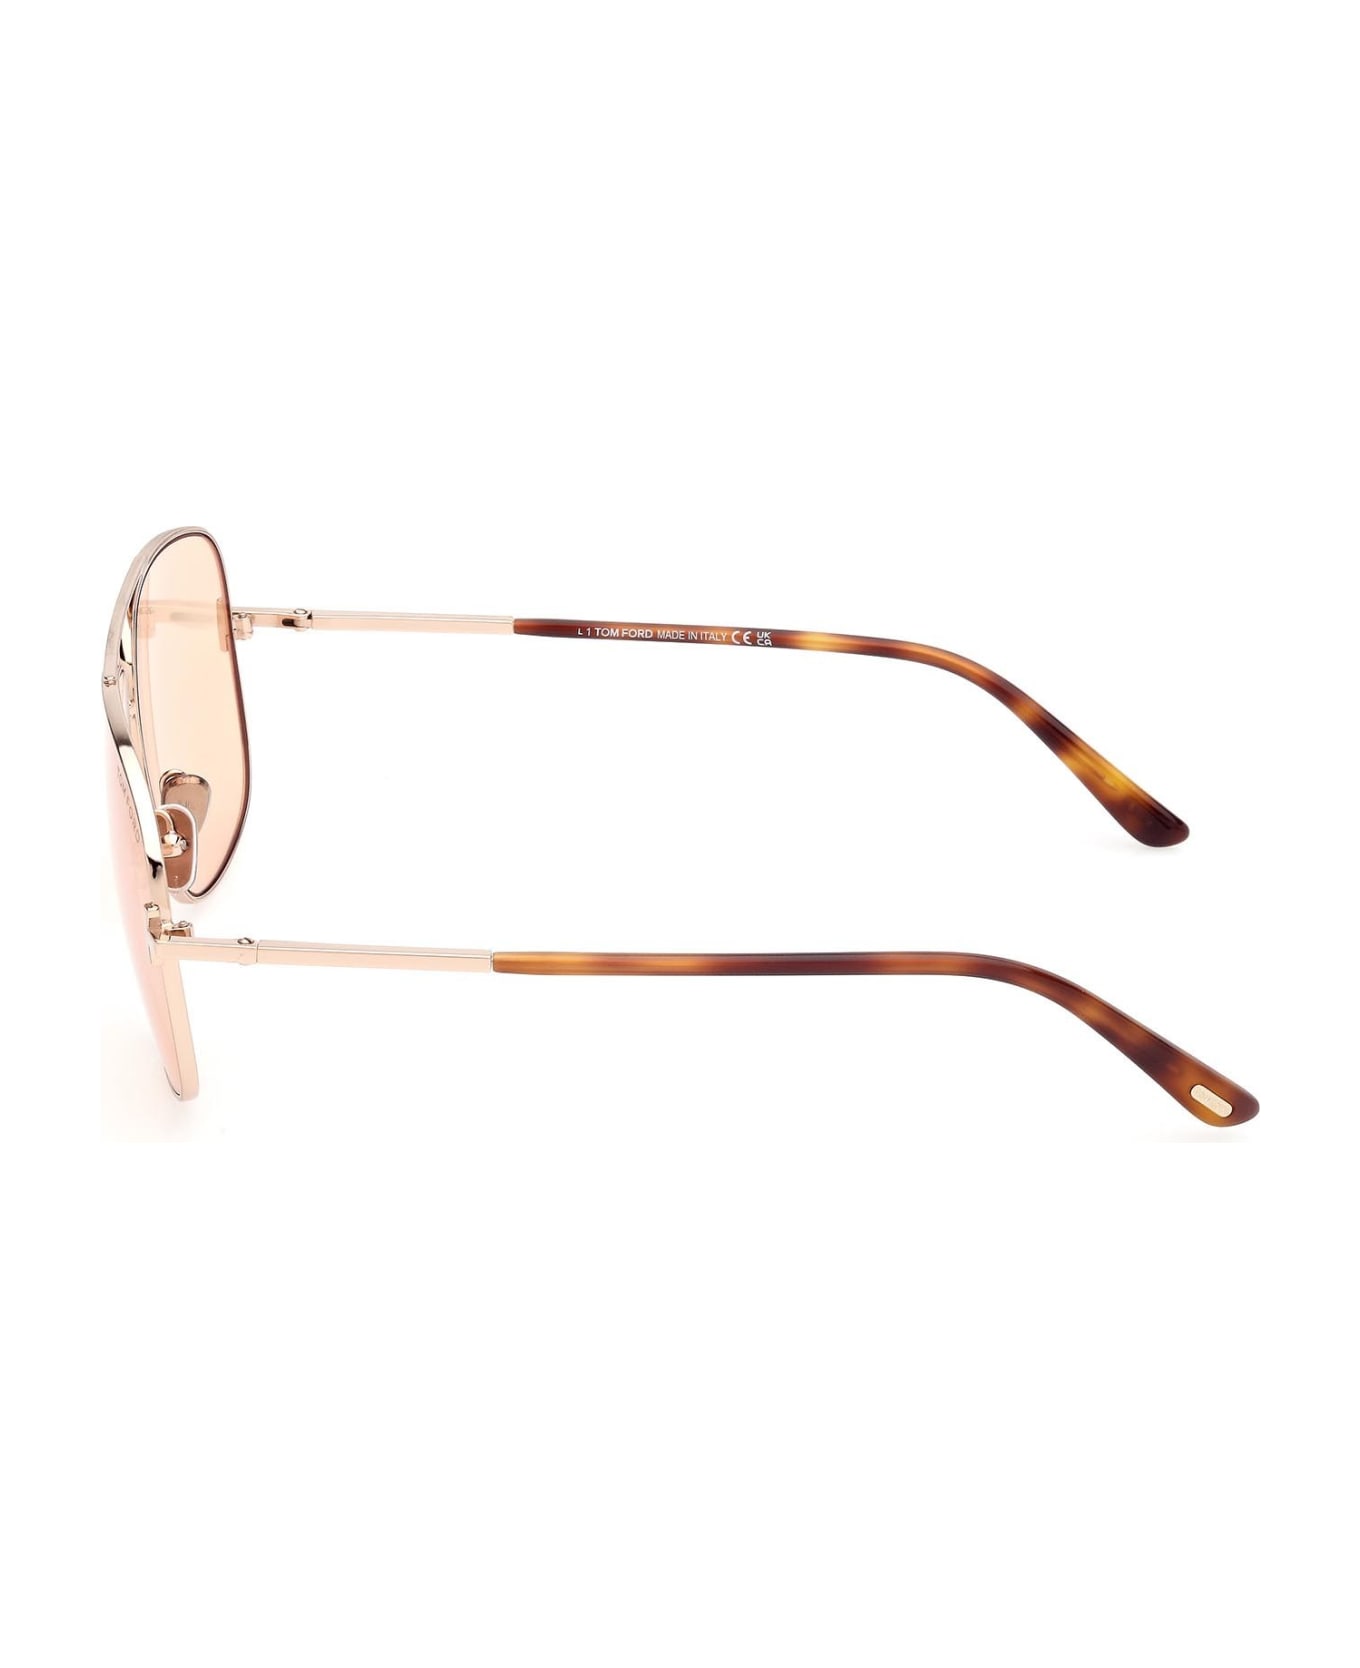 Tom Ford Eyewear Sunglasses - Oro/Marrone サングラス